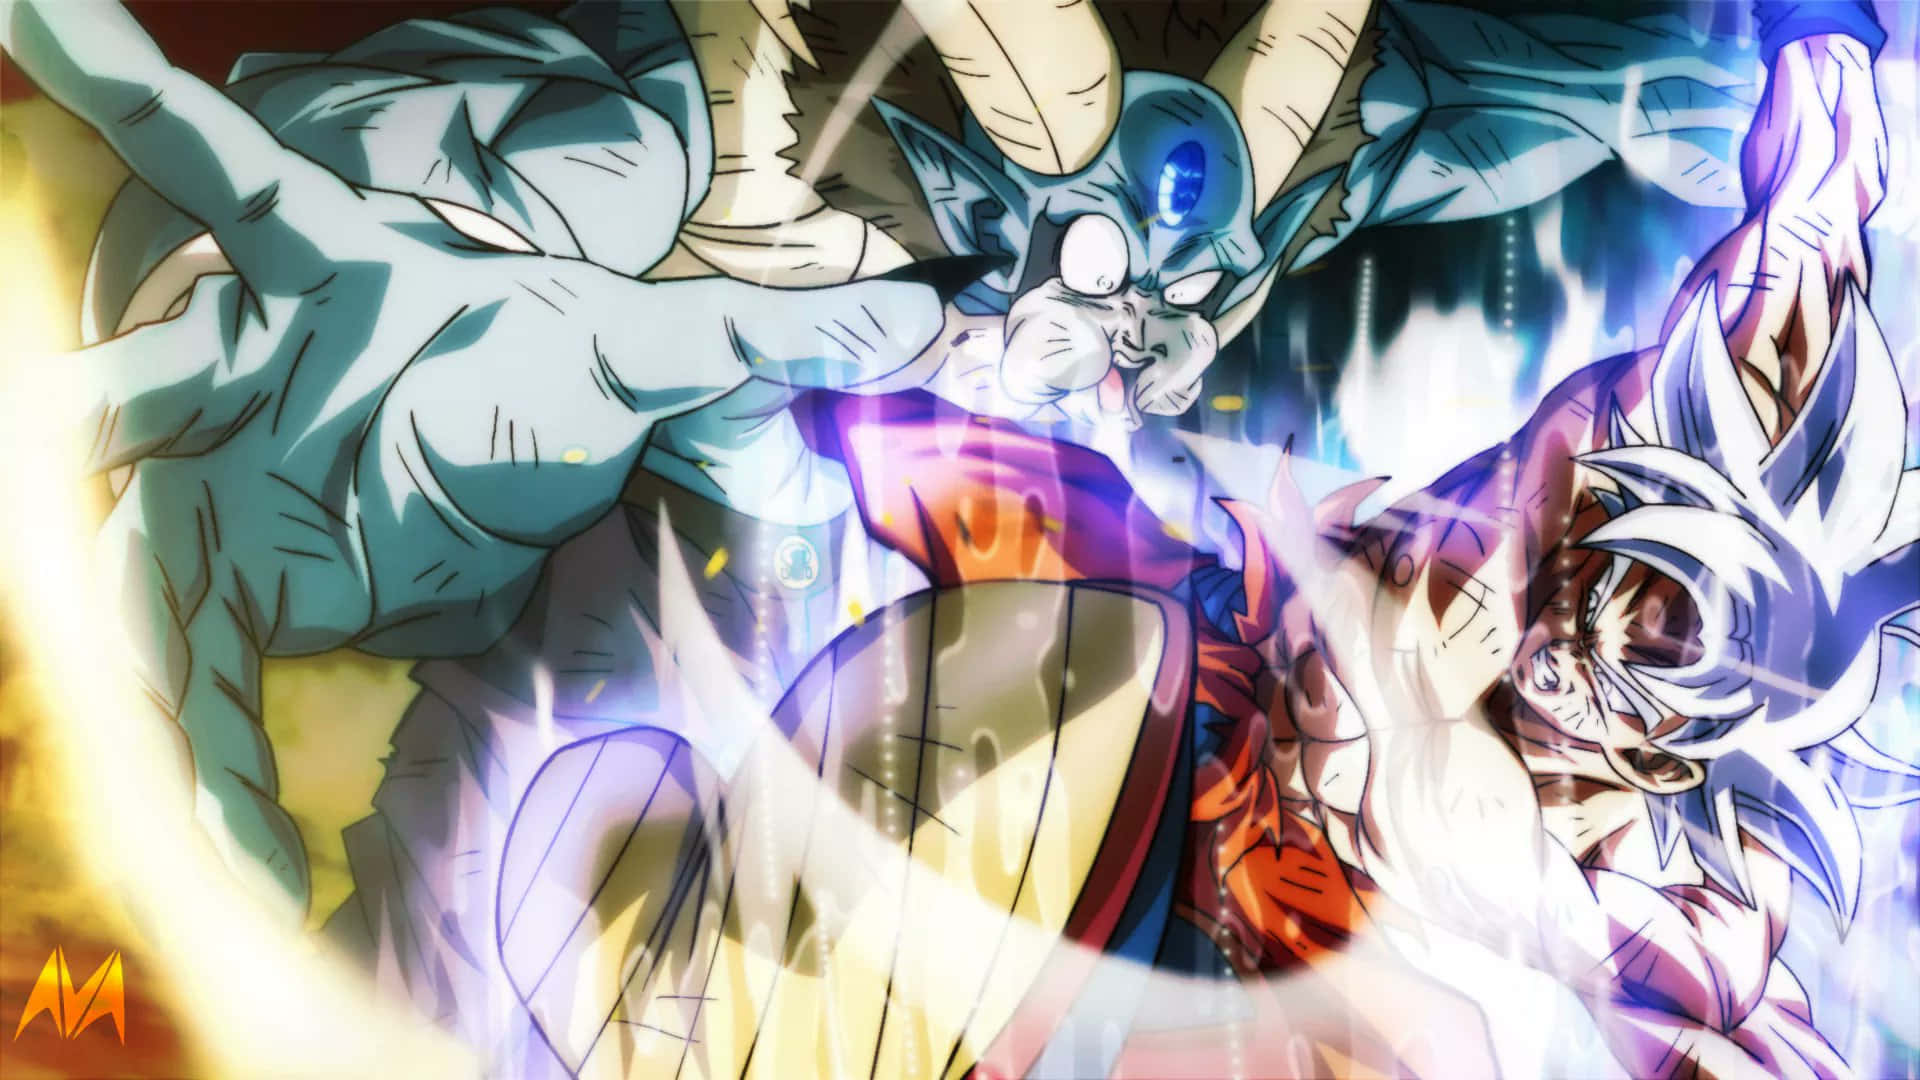 Eumoro Na Imagem Do Goku Battle Dragon Ball Super.